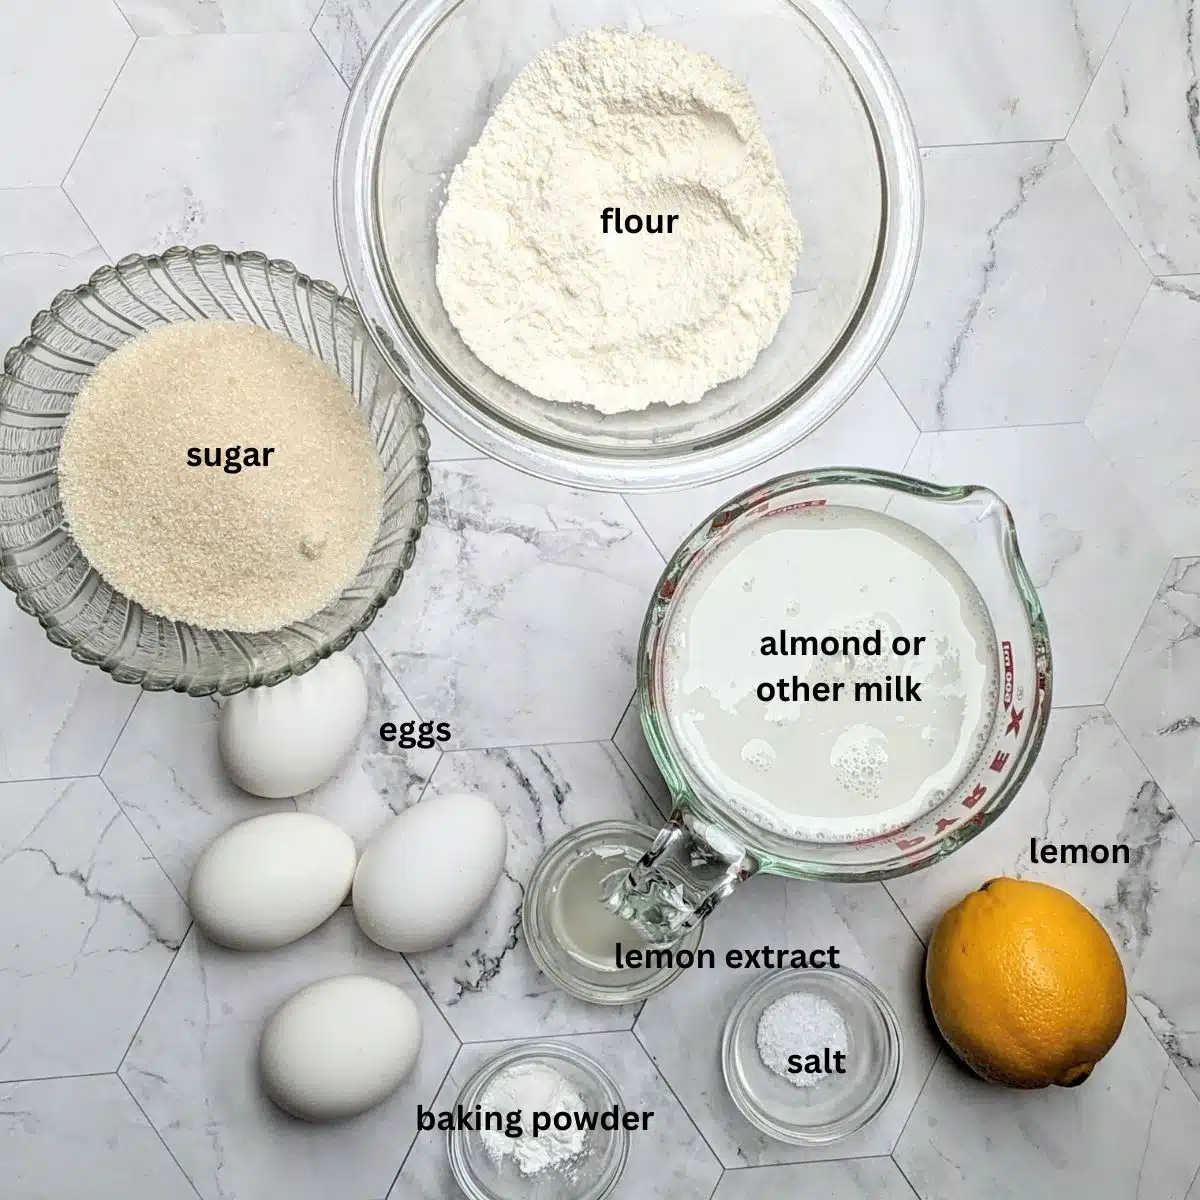 Ingredients to make lemon Impossible pie.